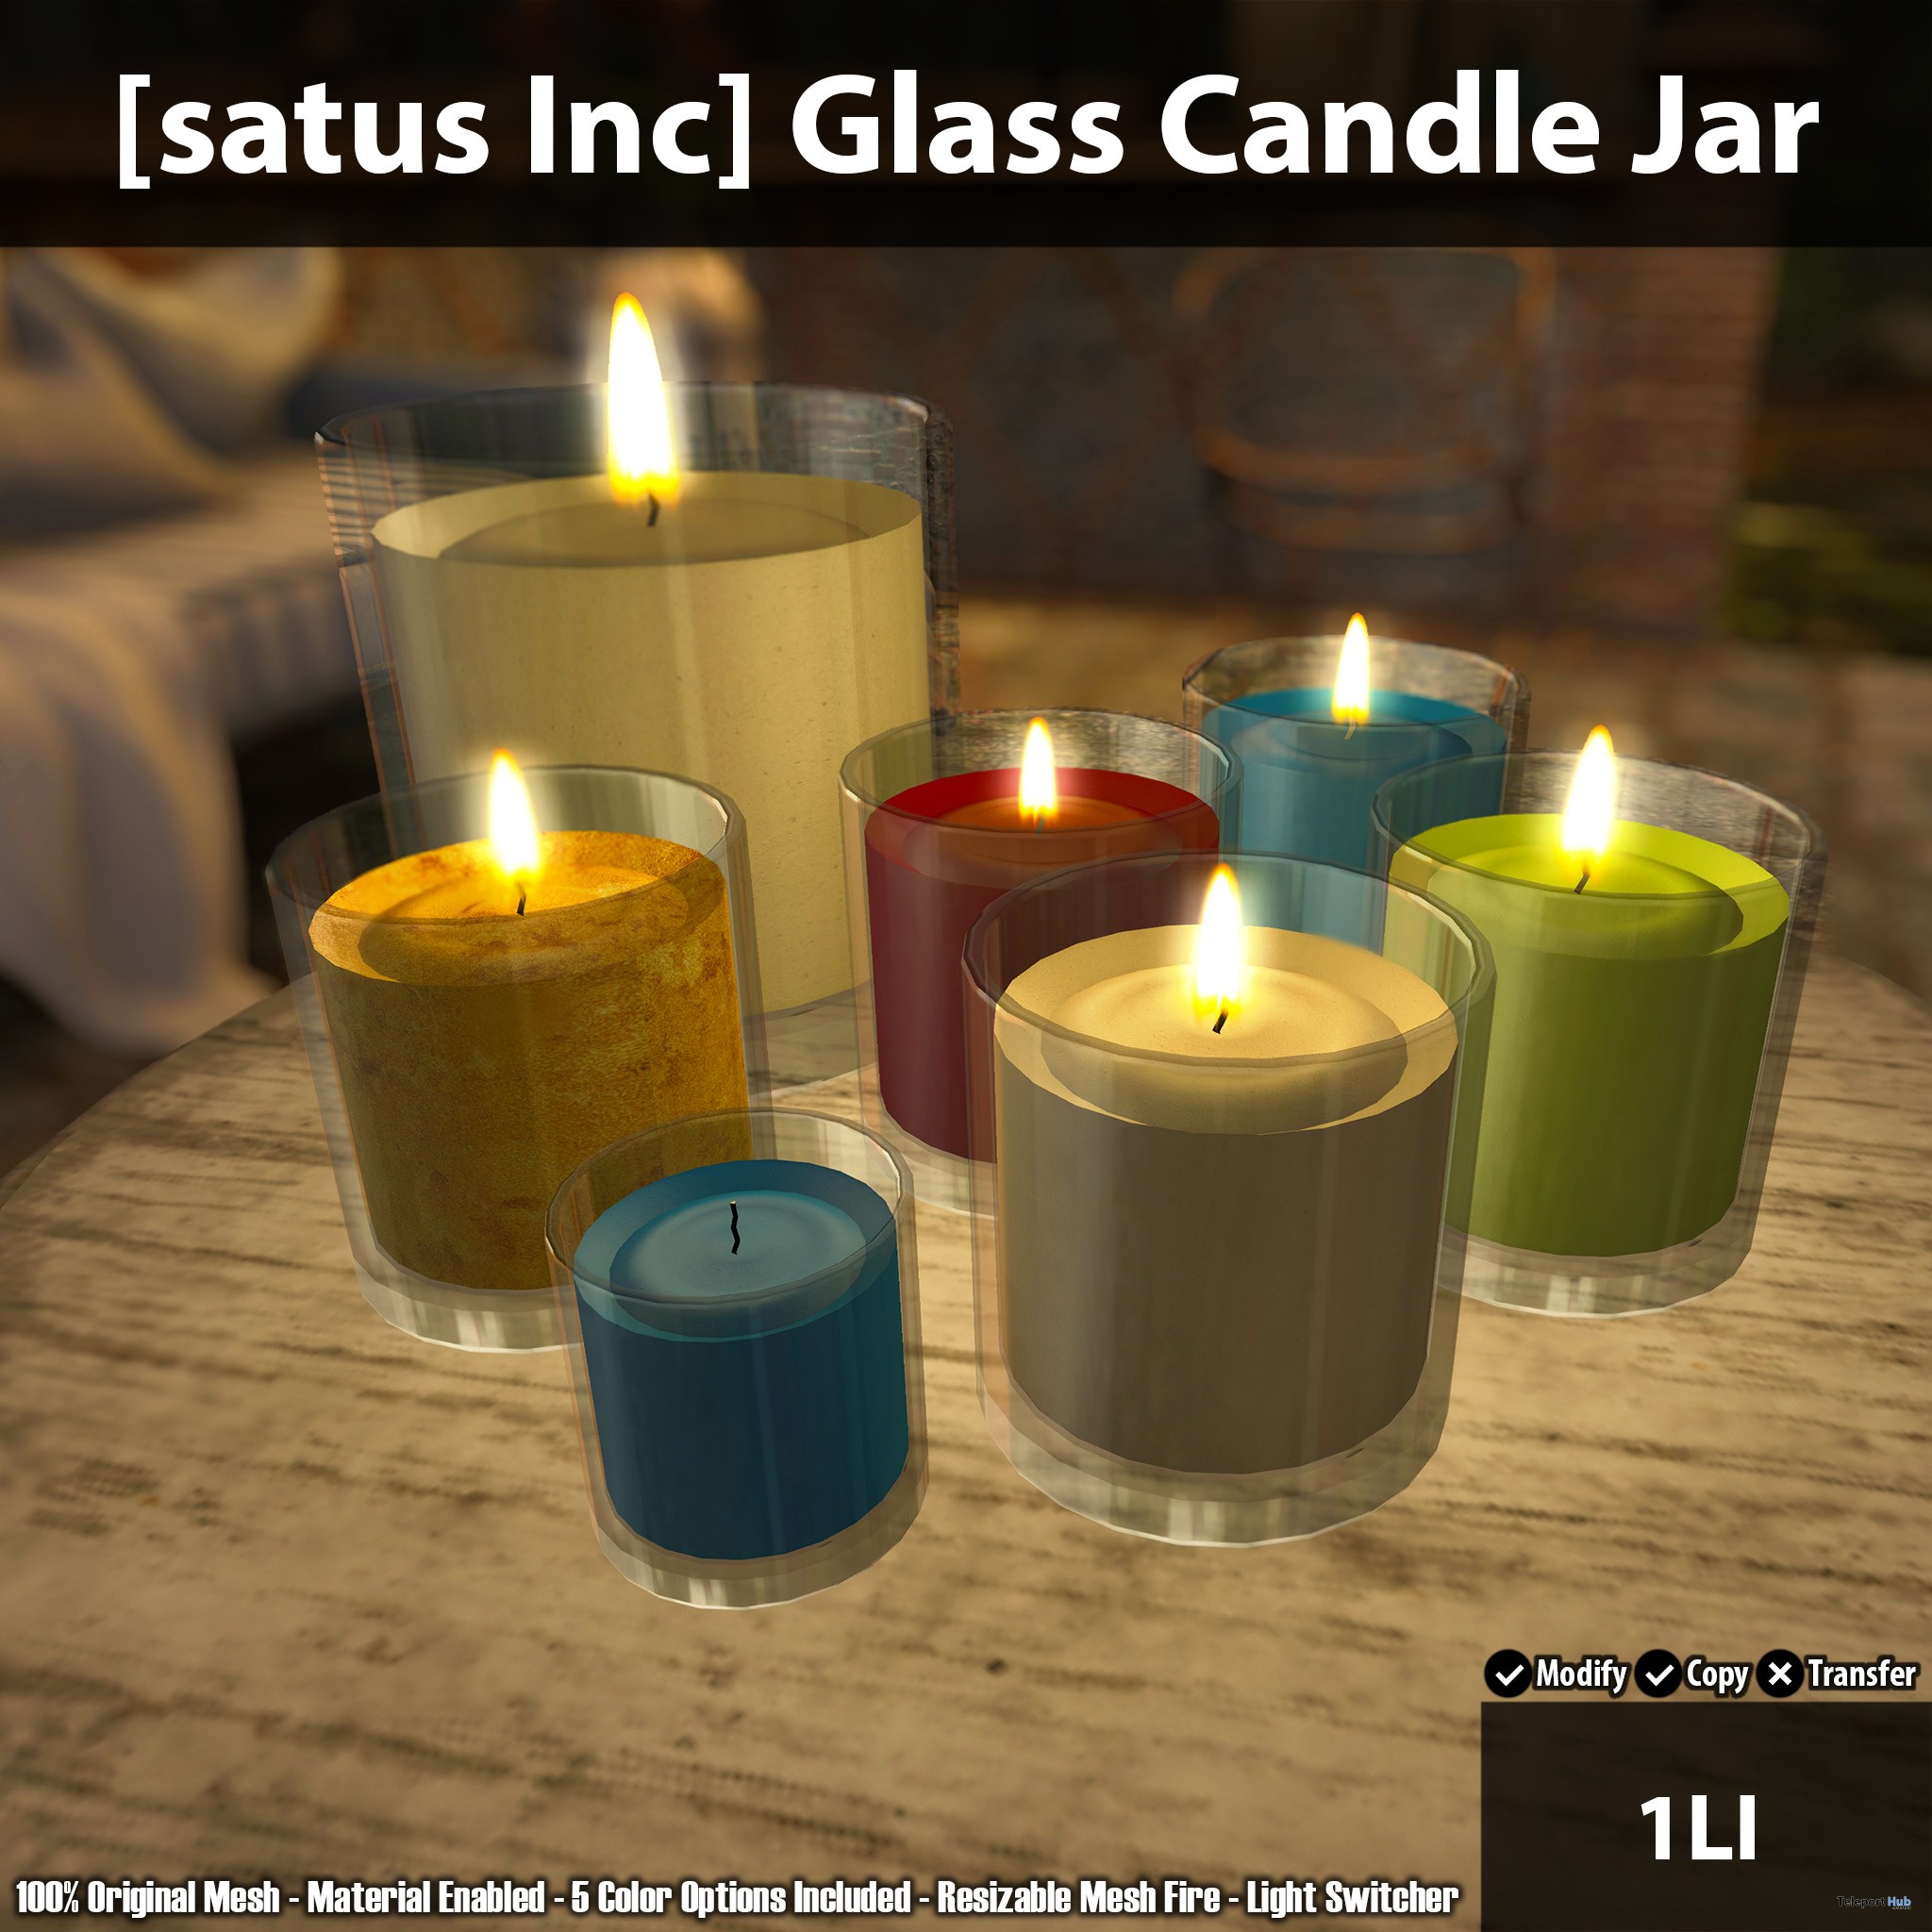 New Release: Glass Candle Jar by [satus Inc] - Teleport Hub - teleporthub.com